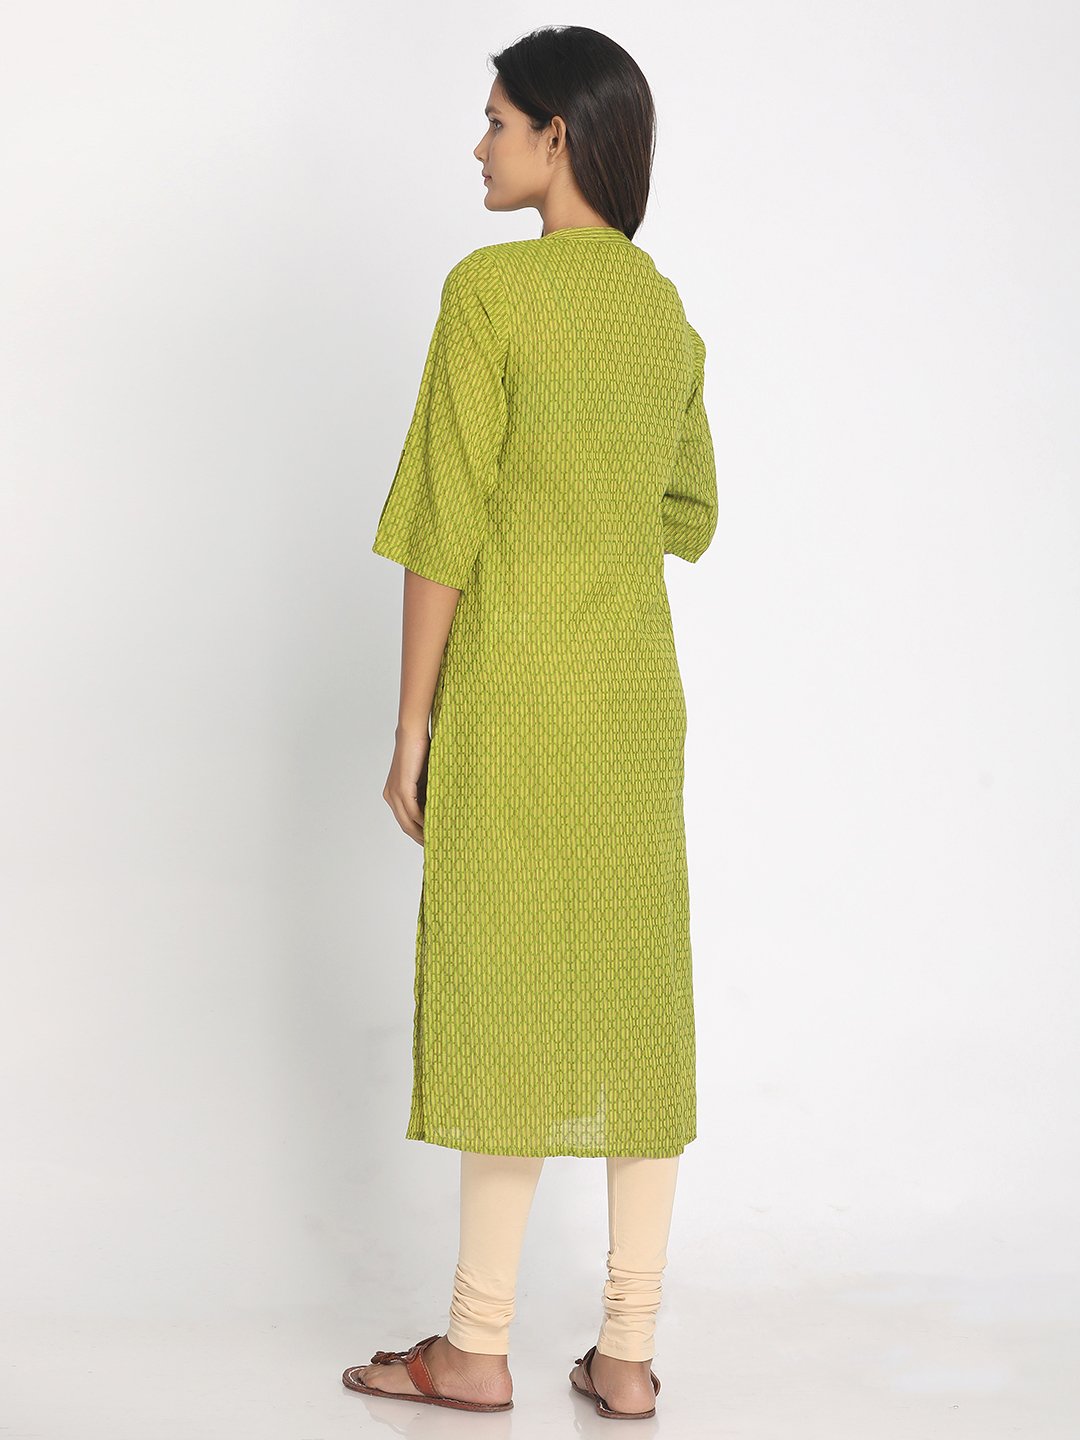 100% Cotton Green Self Design Slited Sleeves Long Kurta